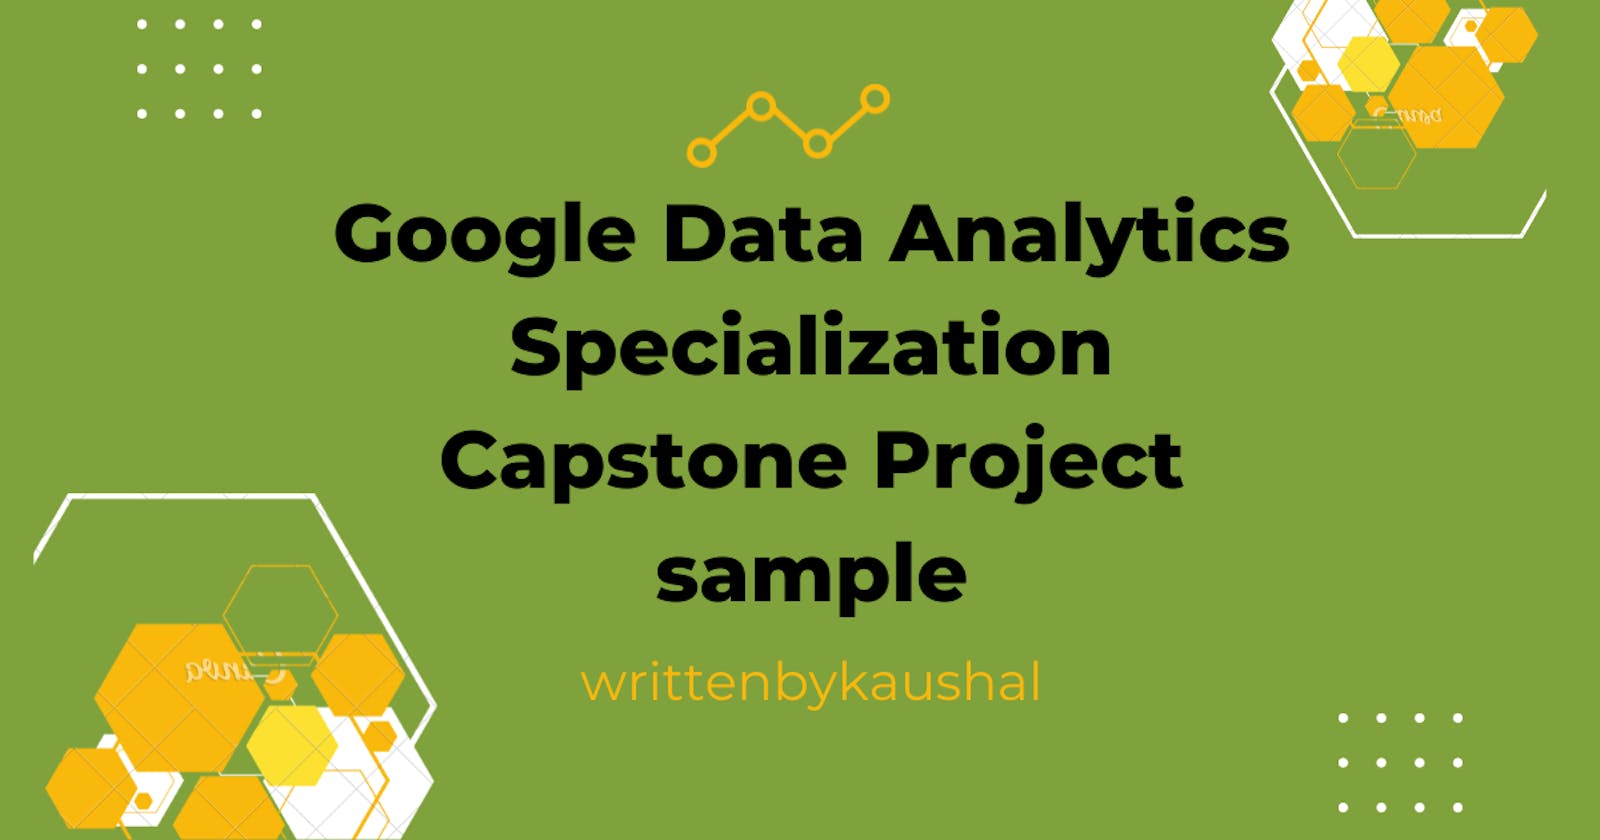 Google Data Analytics Specialization Capstone Project sample